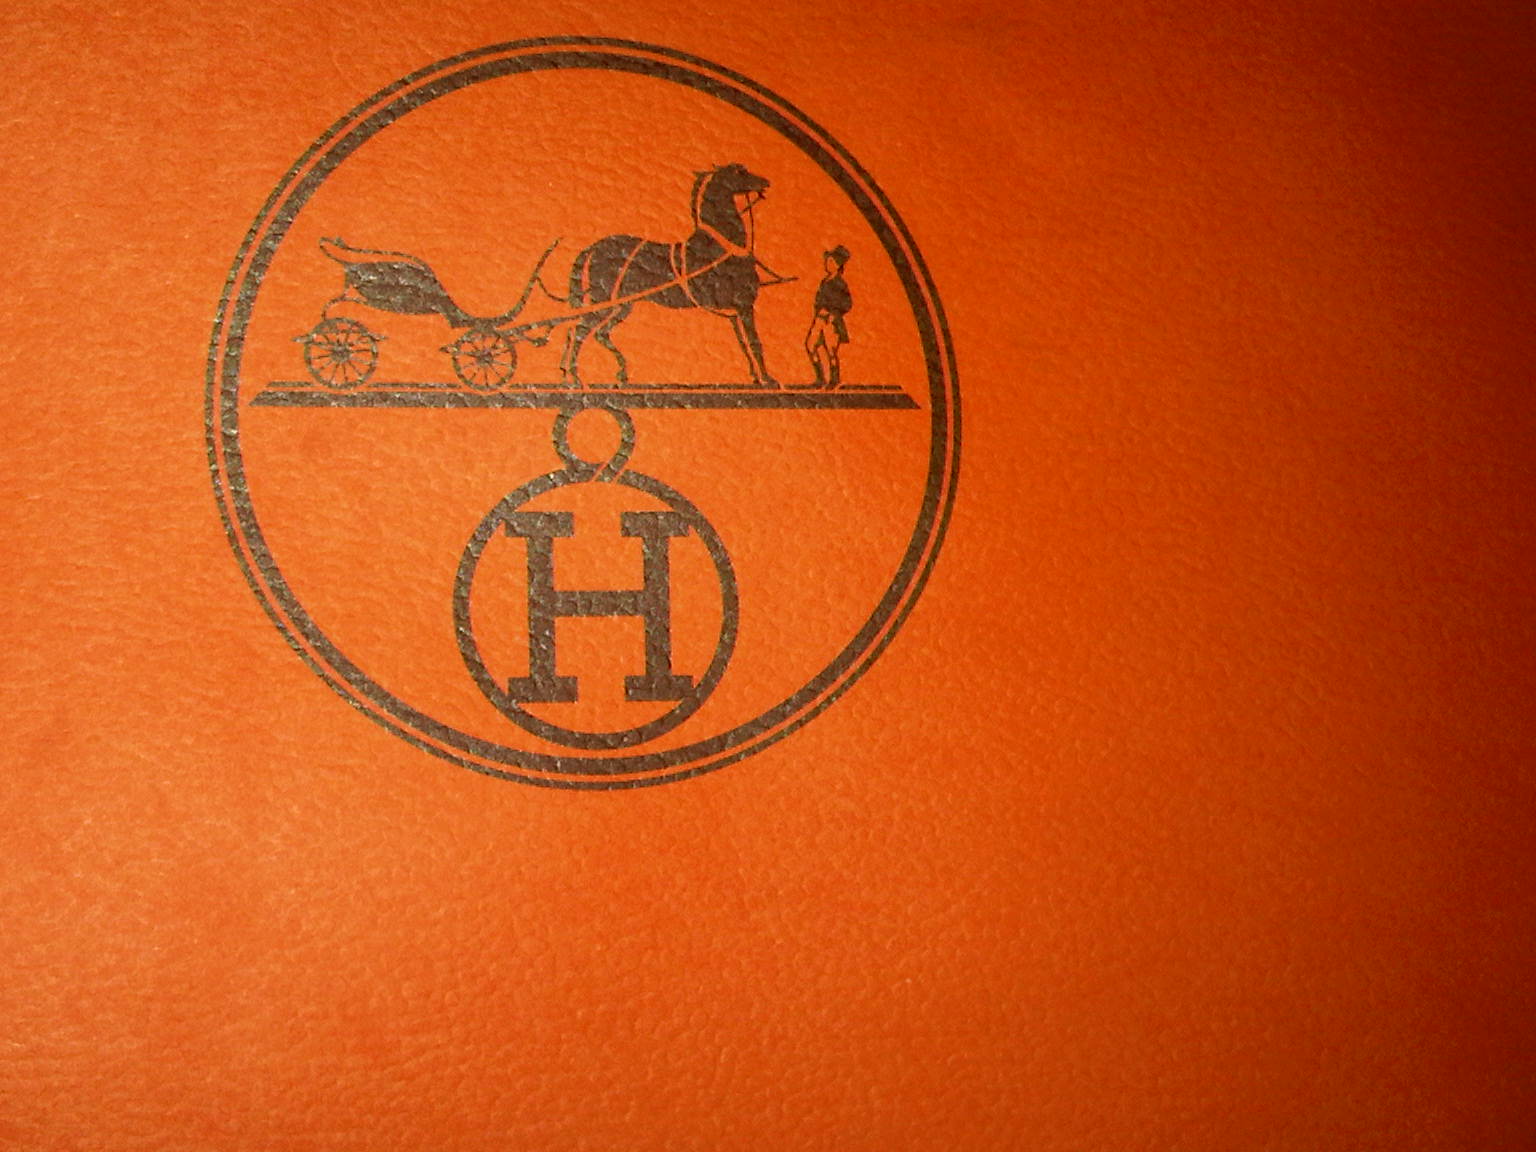 High Resolution Hermes Logo Wallpapers